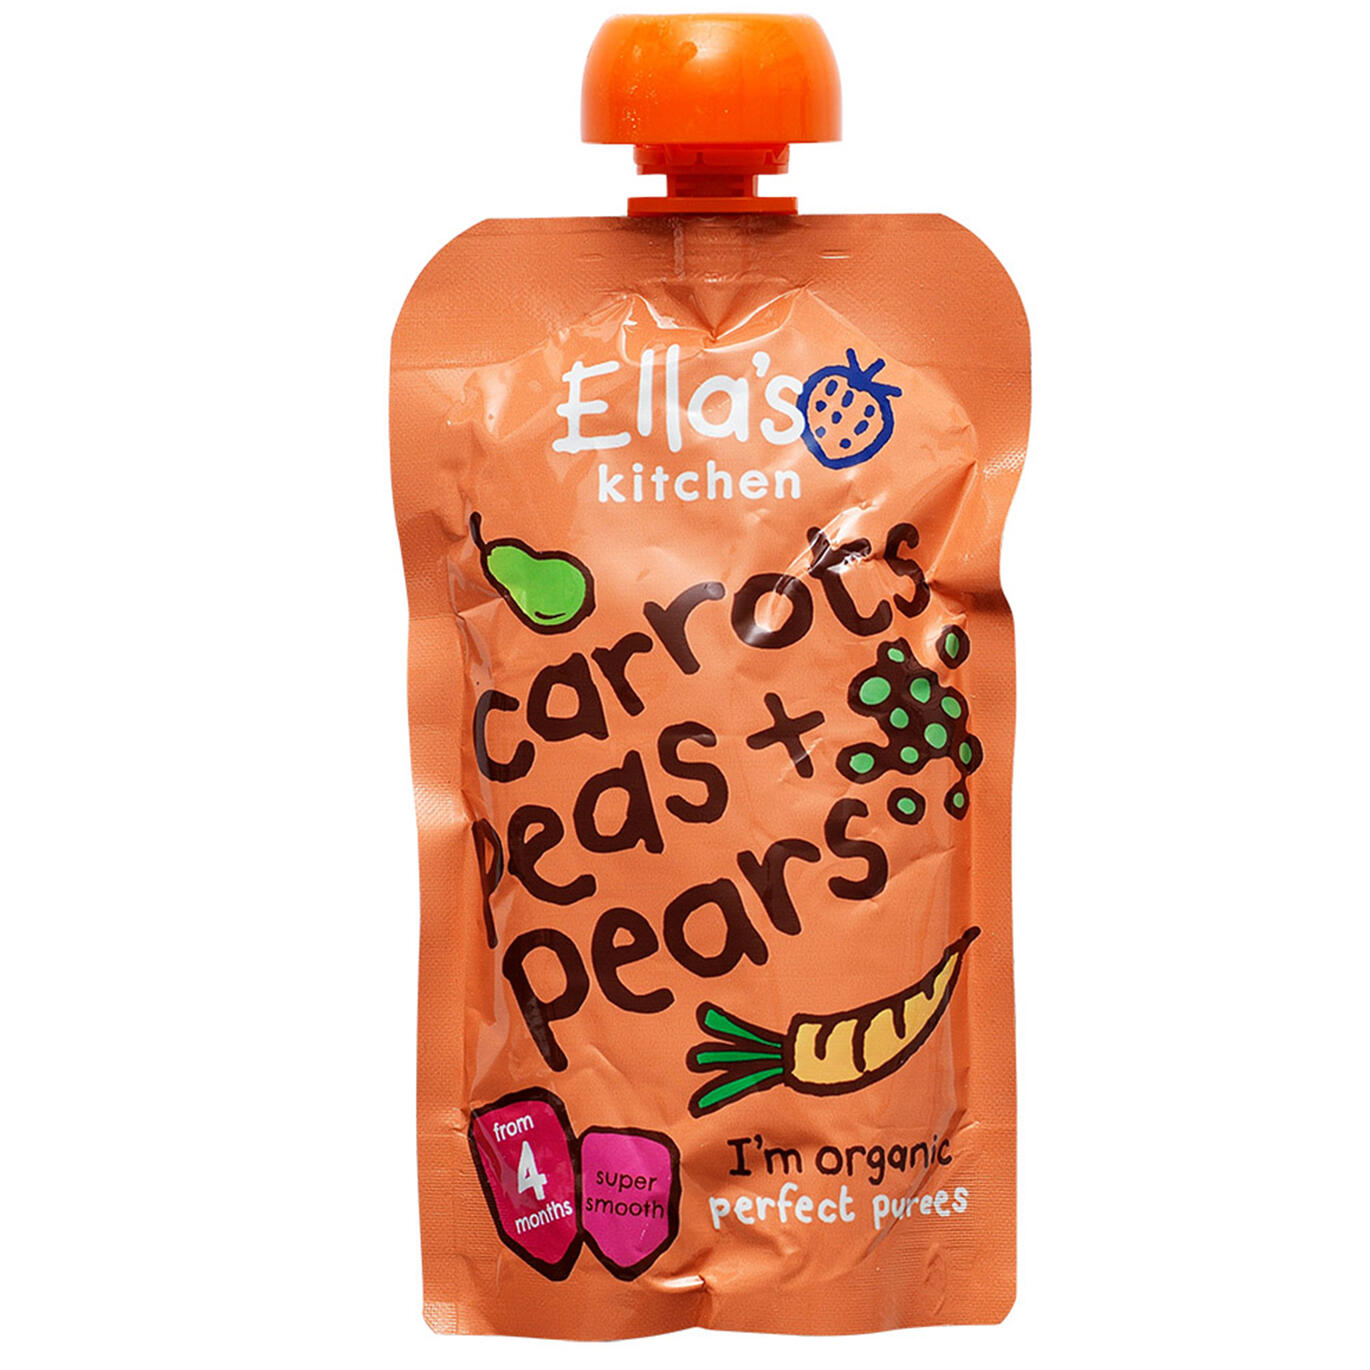 carrots, peas + pears Ella's kitchen